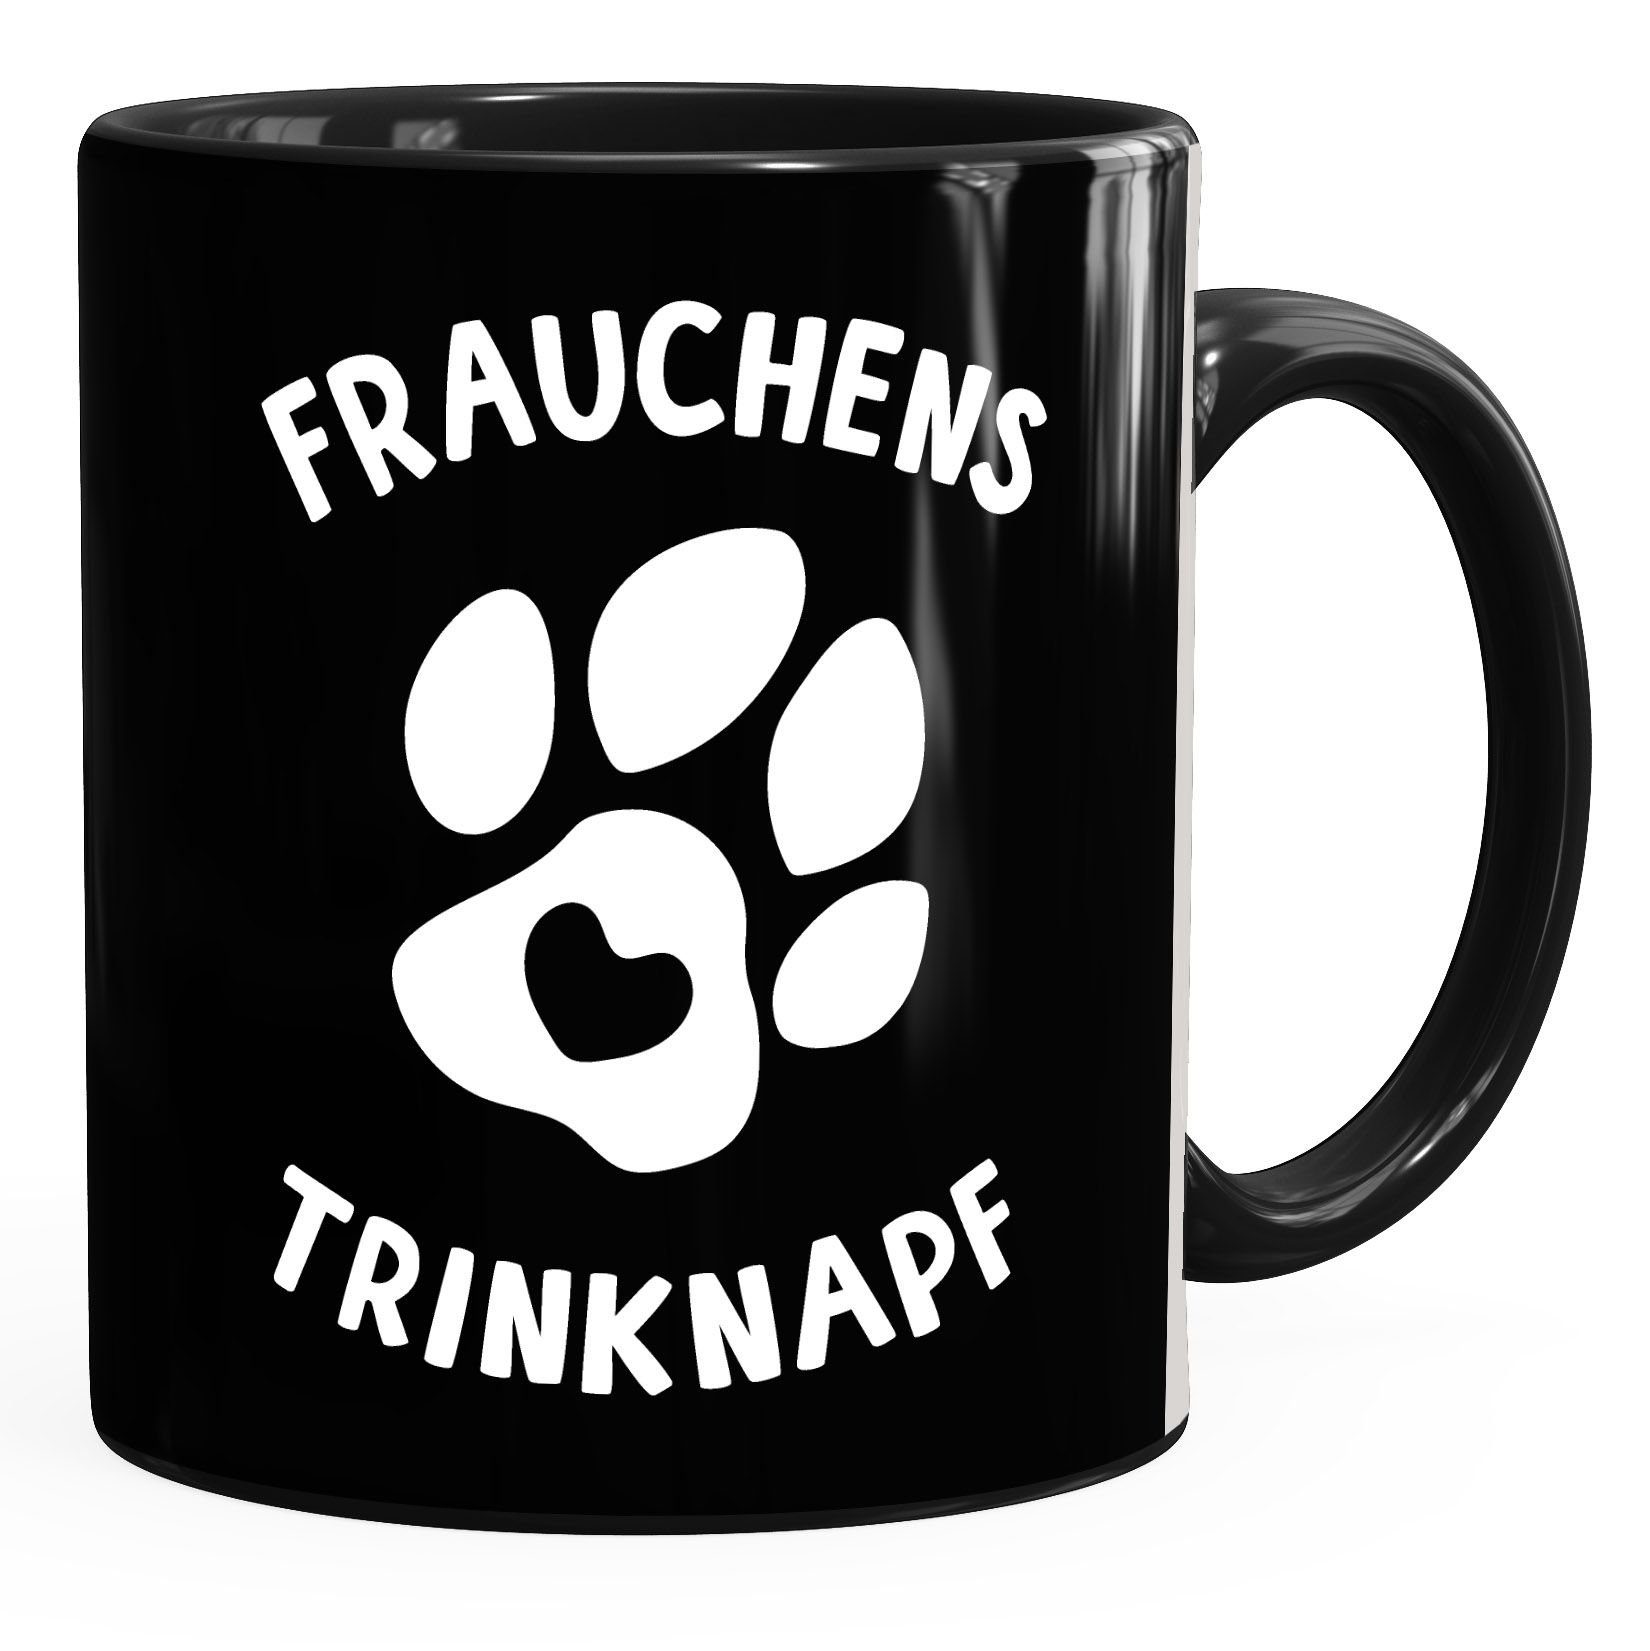 MoonWorks Tasse Kaffee-Tasse Spruch Frauchens Trinknapf Hundepfote-Motiv Becher Bürotasse Tasse Hundeliebhaber MoonWorks®, Keramik schwarz